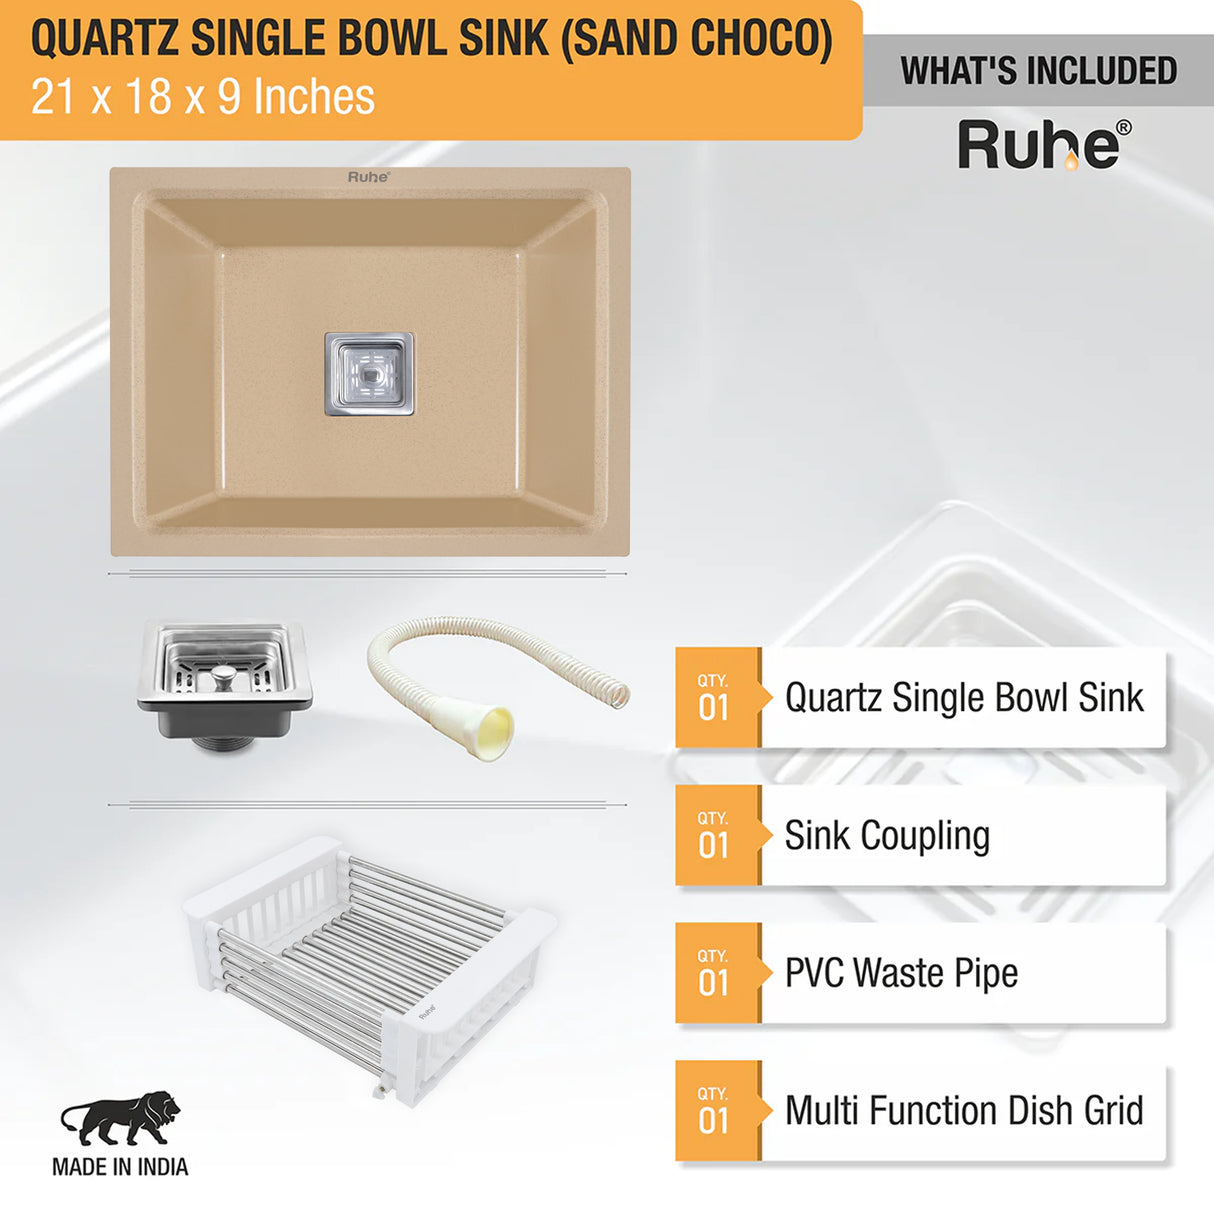 Quartz Single Bowl Kitchen Sink - Sand Choco (21 x 18 x 9 inches) - by Ruhe®